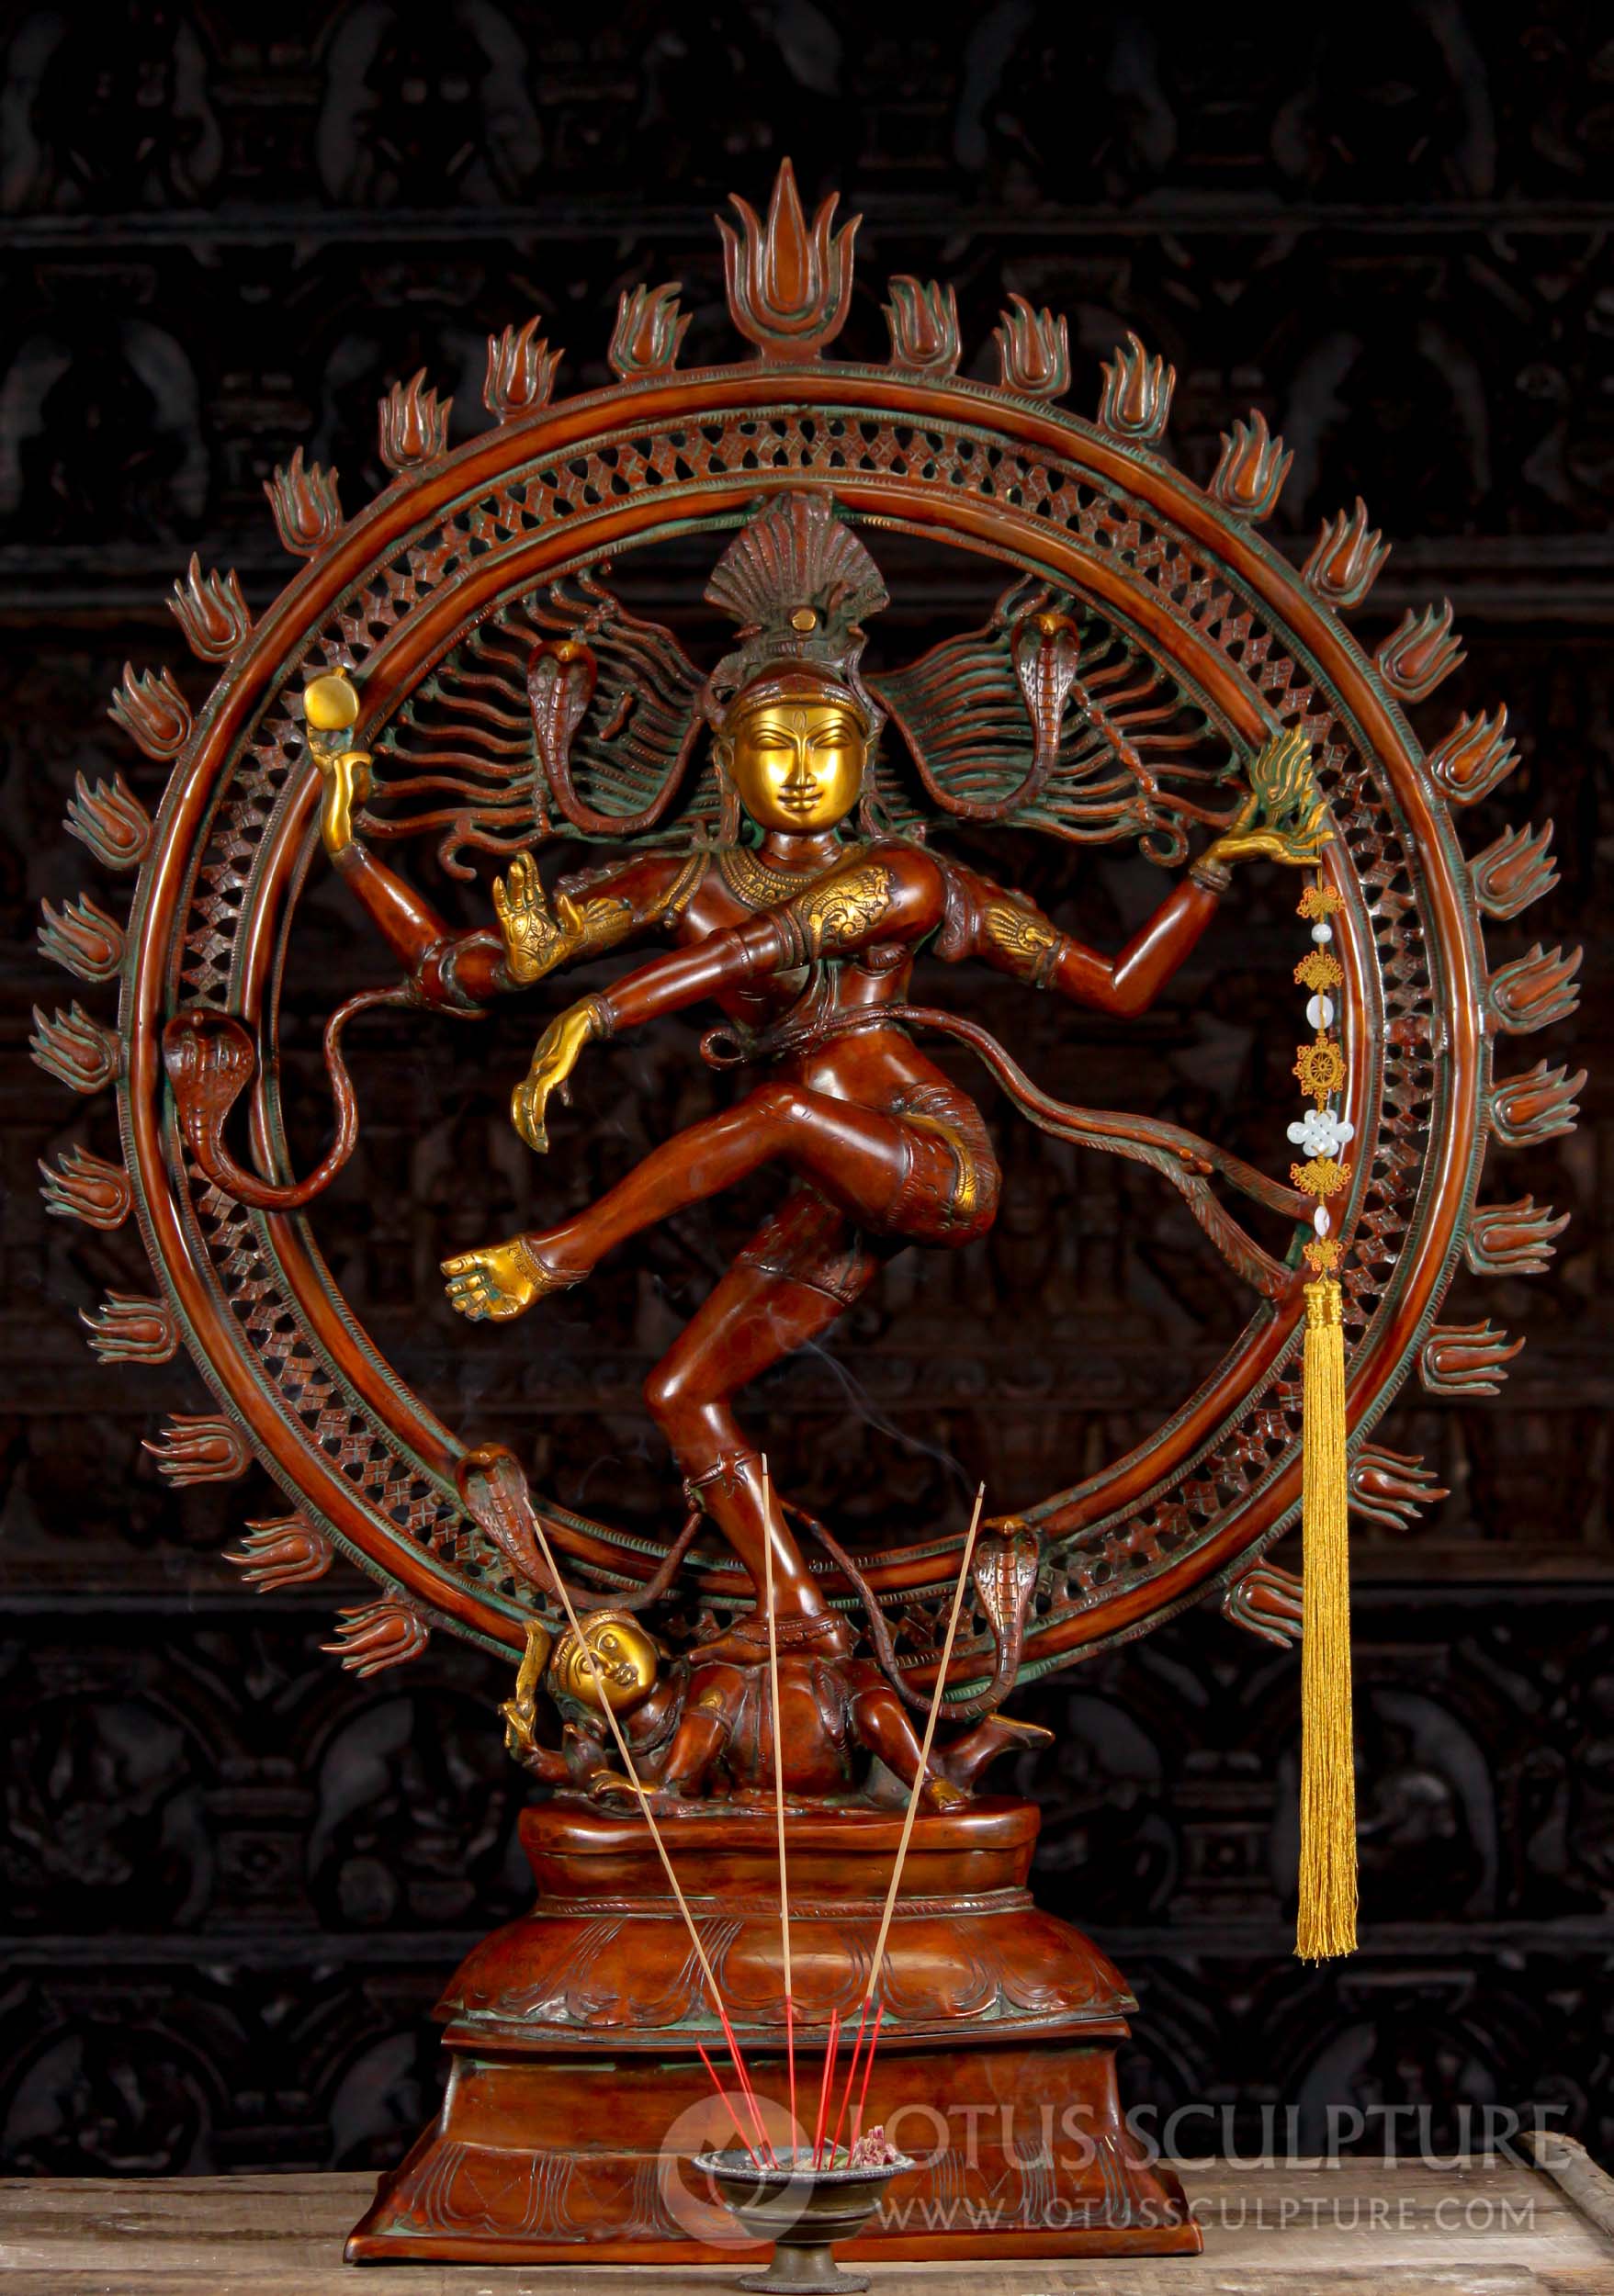 Lord Nataraja' – The Rhythm of Life – Understanding 'Sanatana Dharma'